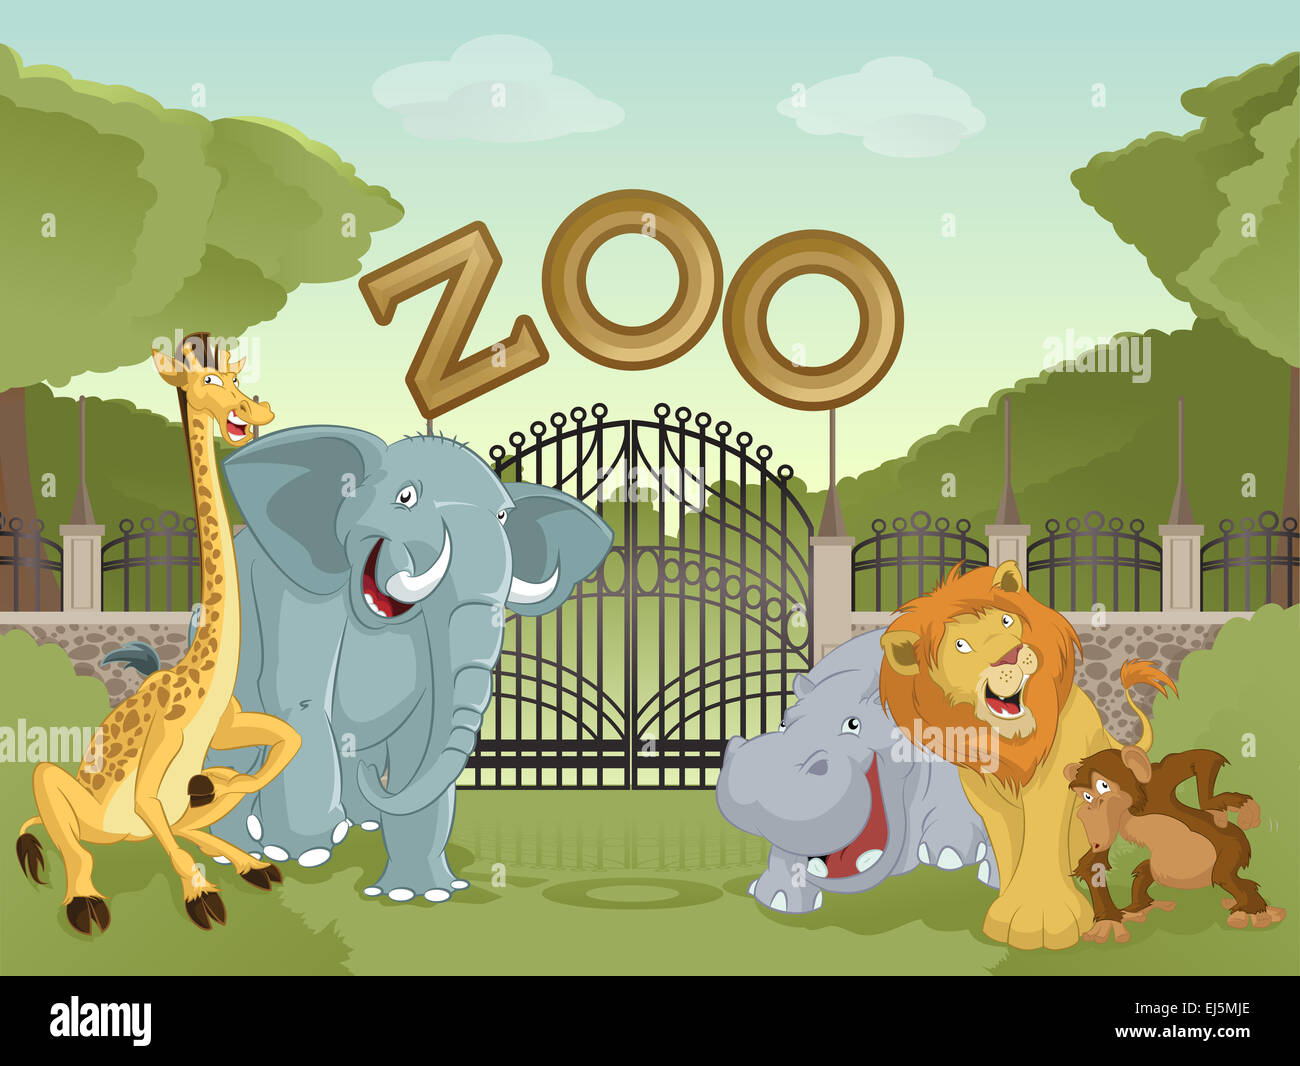 Vector image of cartoon zoo  with animals Stock Photo